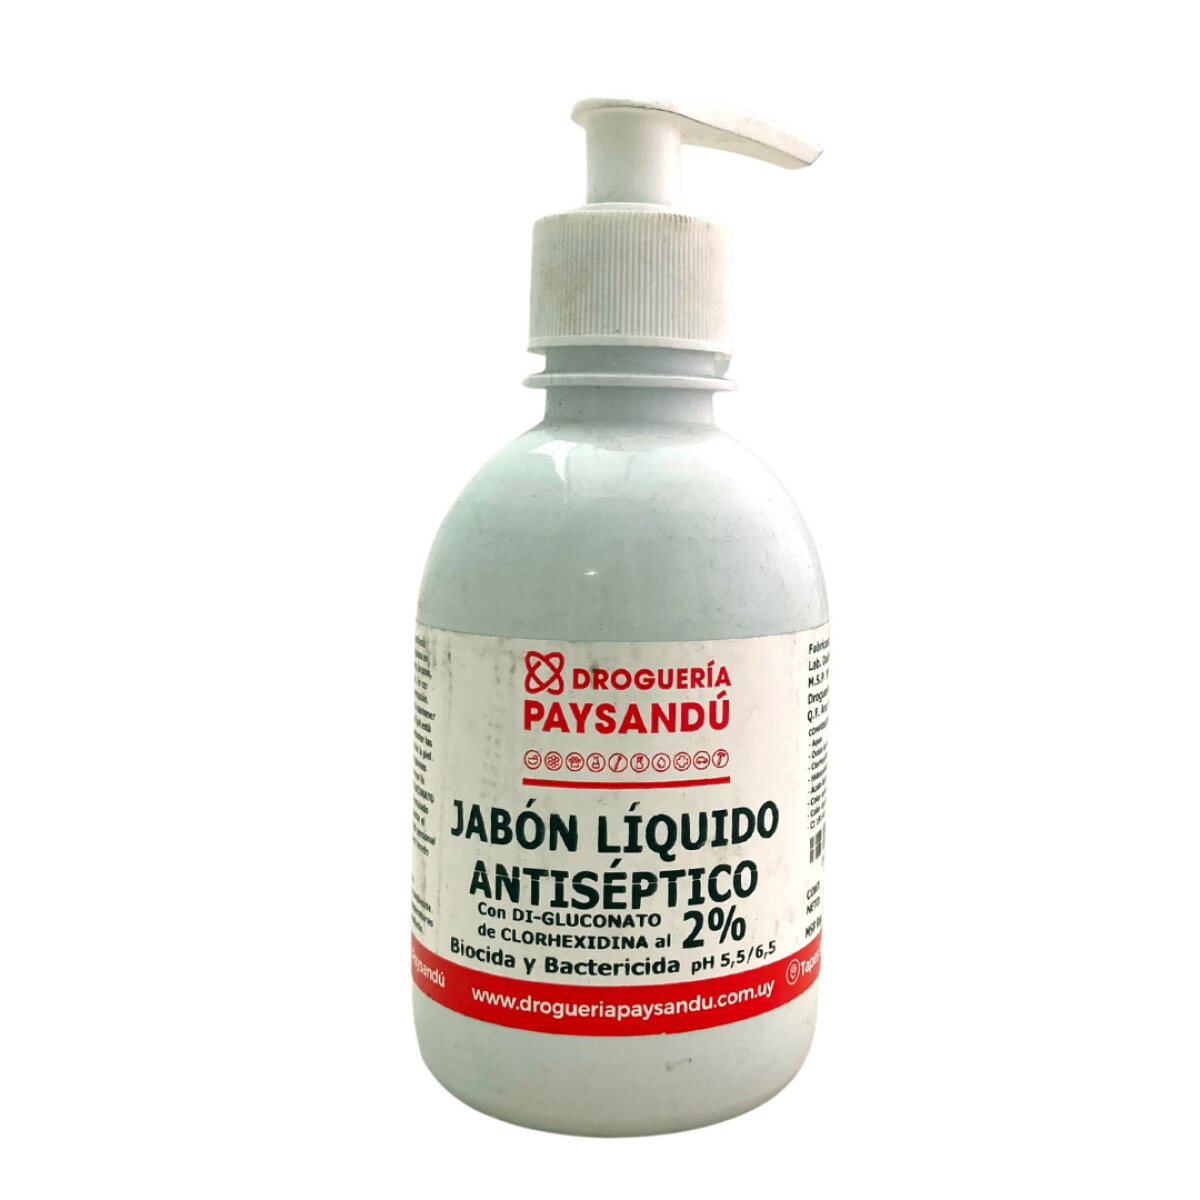 Jabón líquido antiséptico 2% - 250 mL 